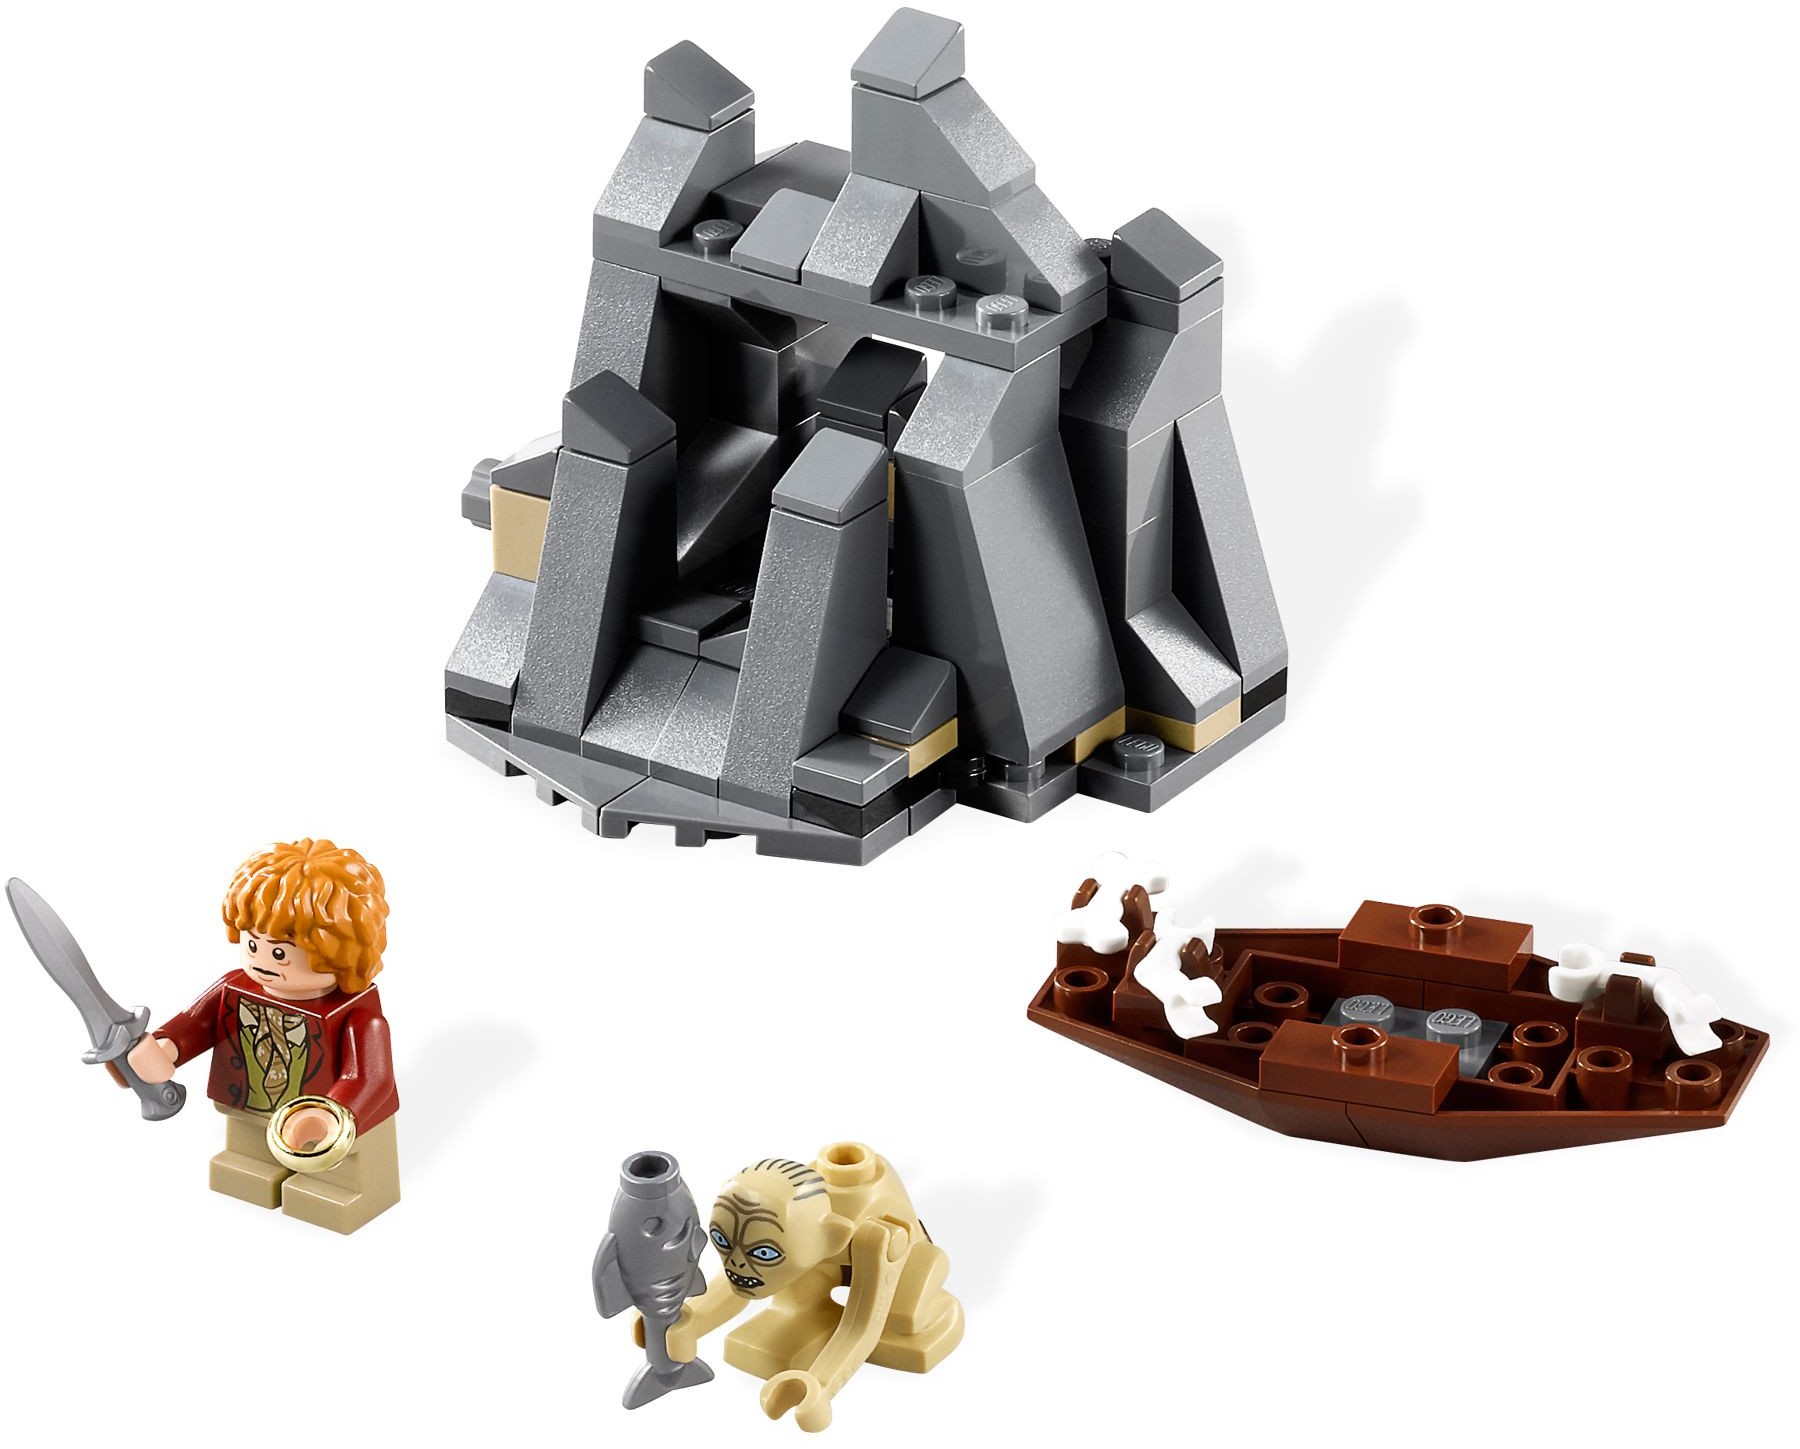 all lego hobbit sets